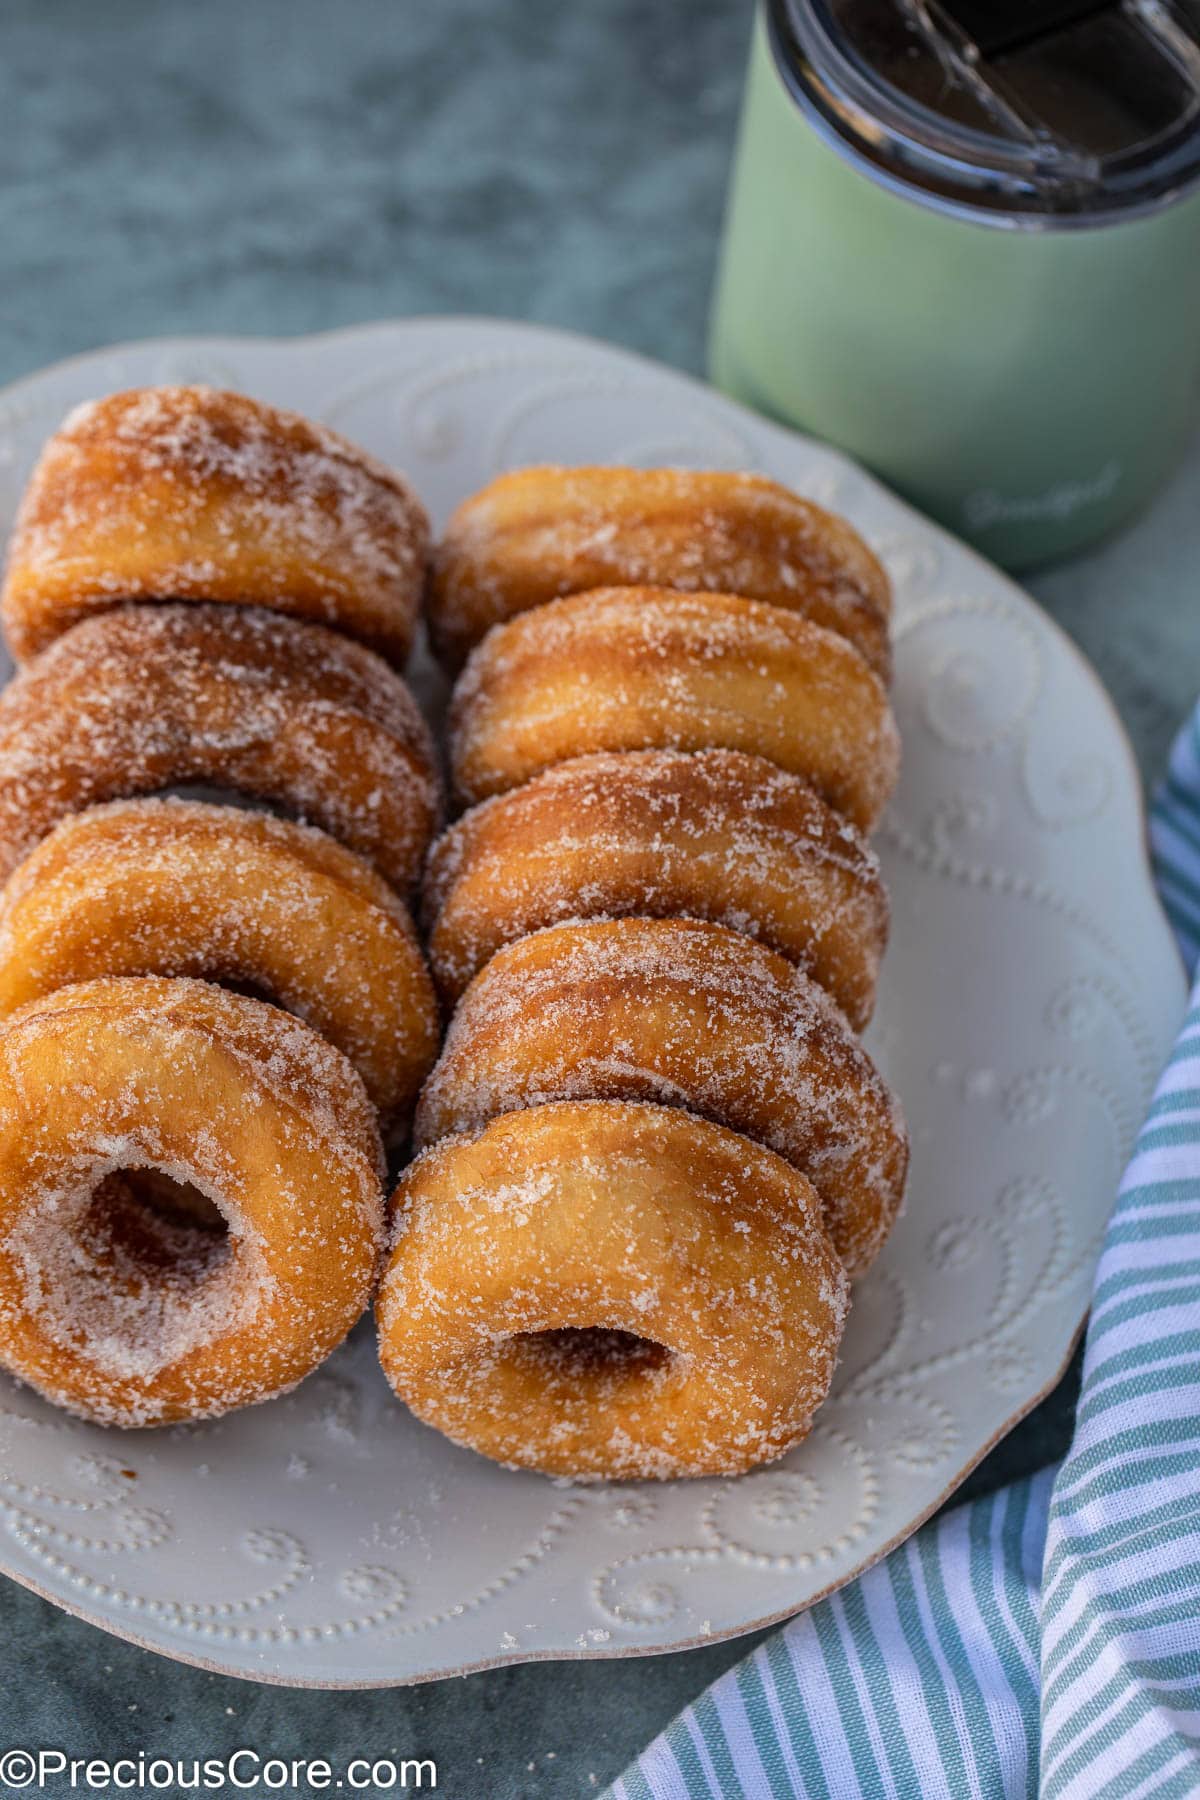 Nine sugar coated donuts on a white plate.